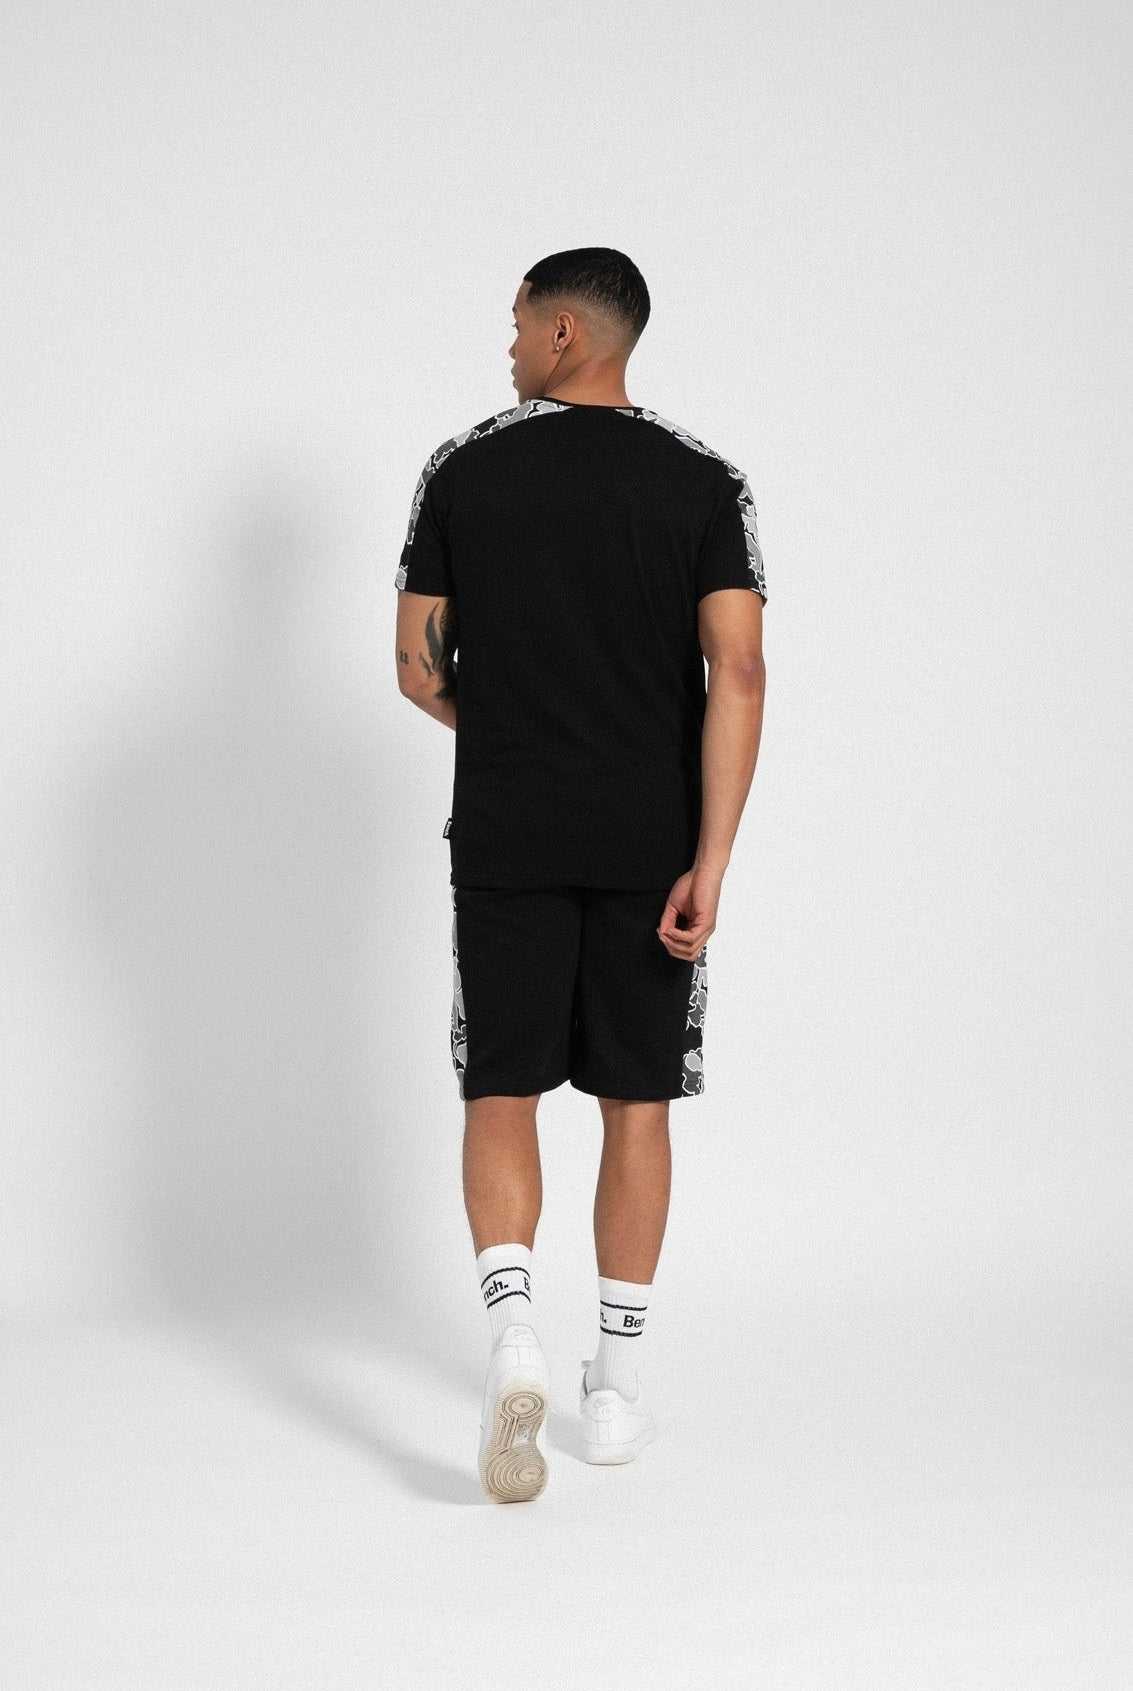 Mens 'KAMO' 2pc T-Shirt & Shorts Set - BLACK - Shop at www.Bench.co.uk #LoveMyHood